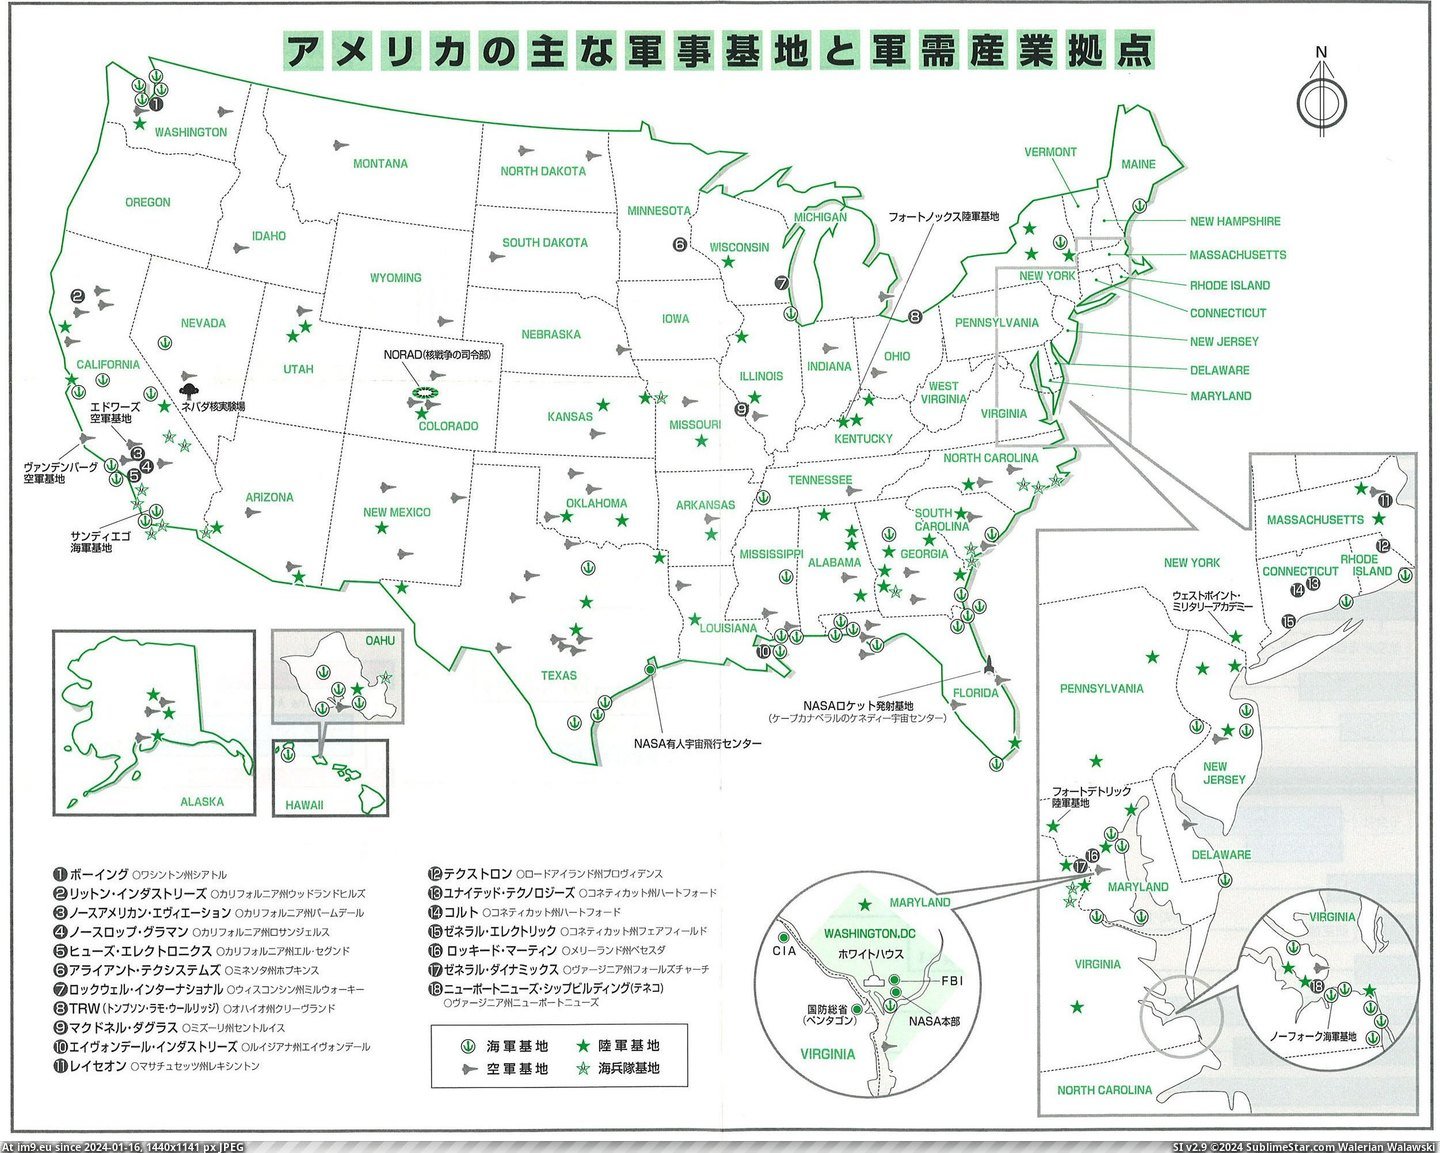 #Japanese #Map #Defense #Military #Nasa [Mapporn] Japanese map of US military bases, defense contractors, and NASA facilities. [2502x1994] Pic. (Изображение из альбом My r/MAPS favs))